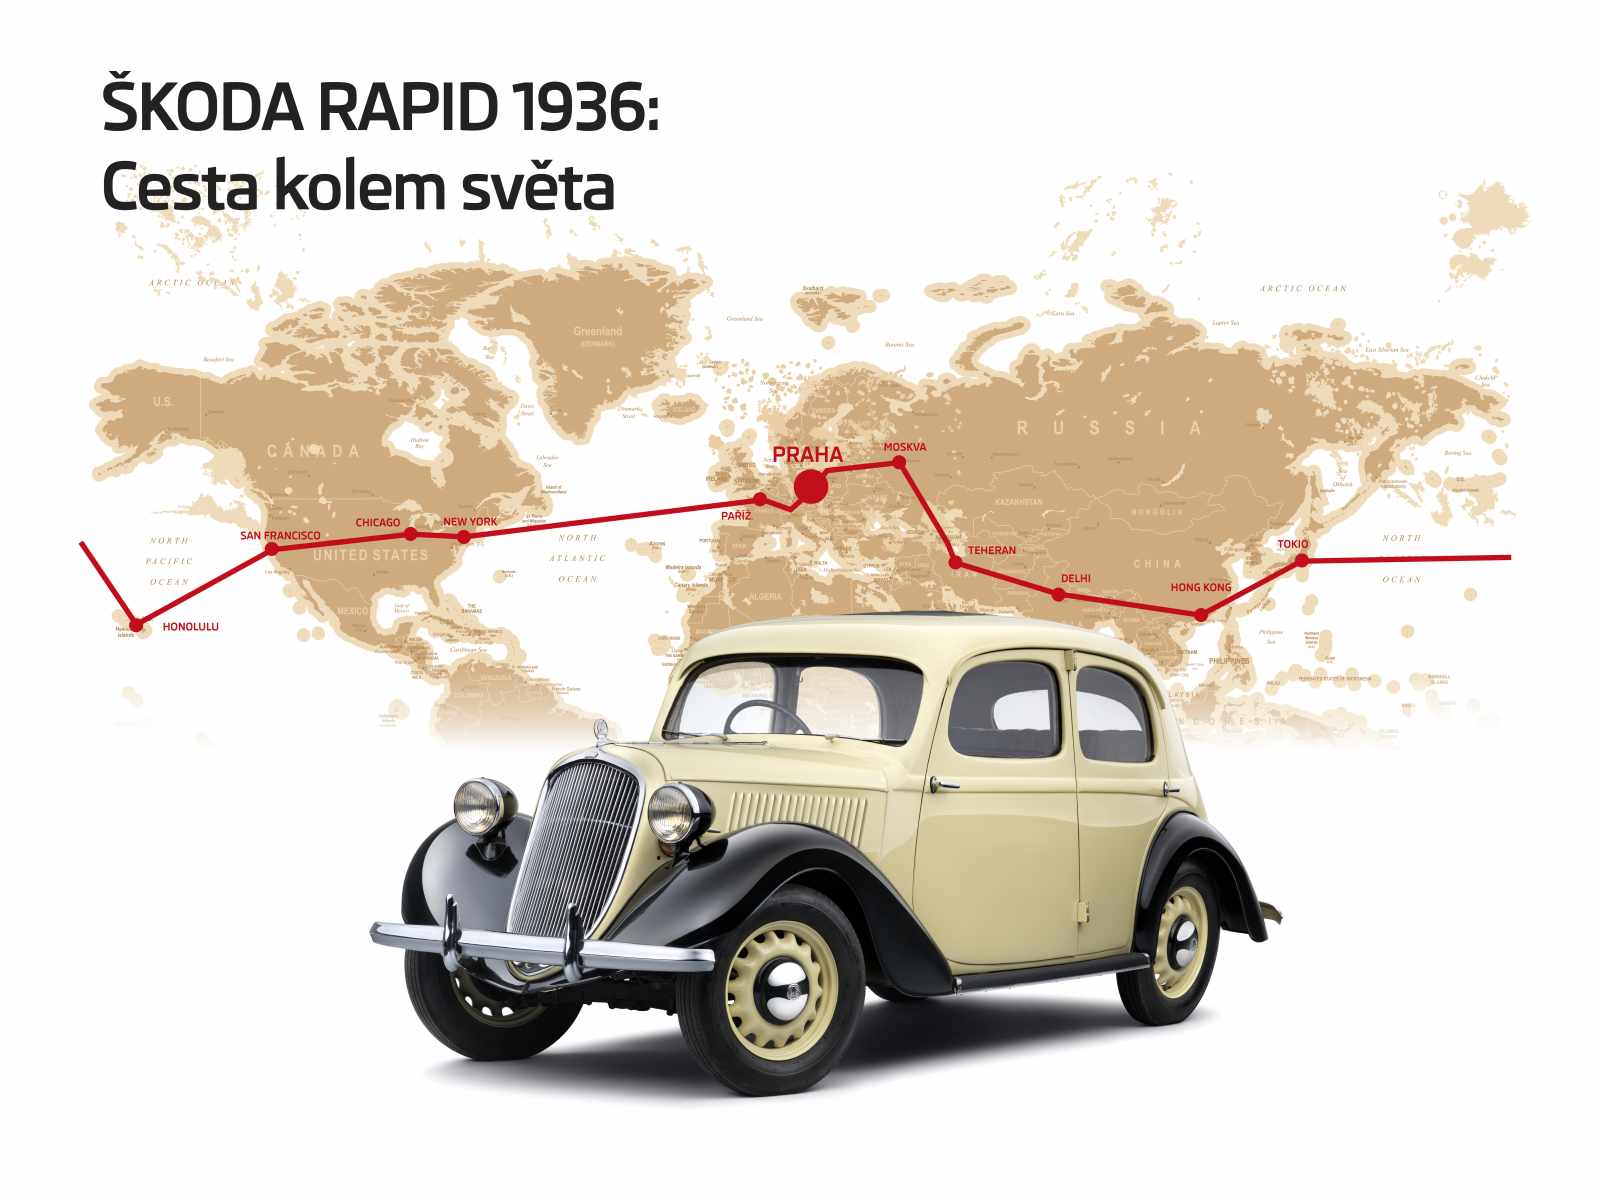 1935-Skoda-Rapid-typ-901-cesta-kolem-sveta-1936